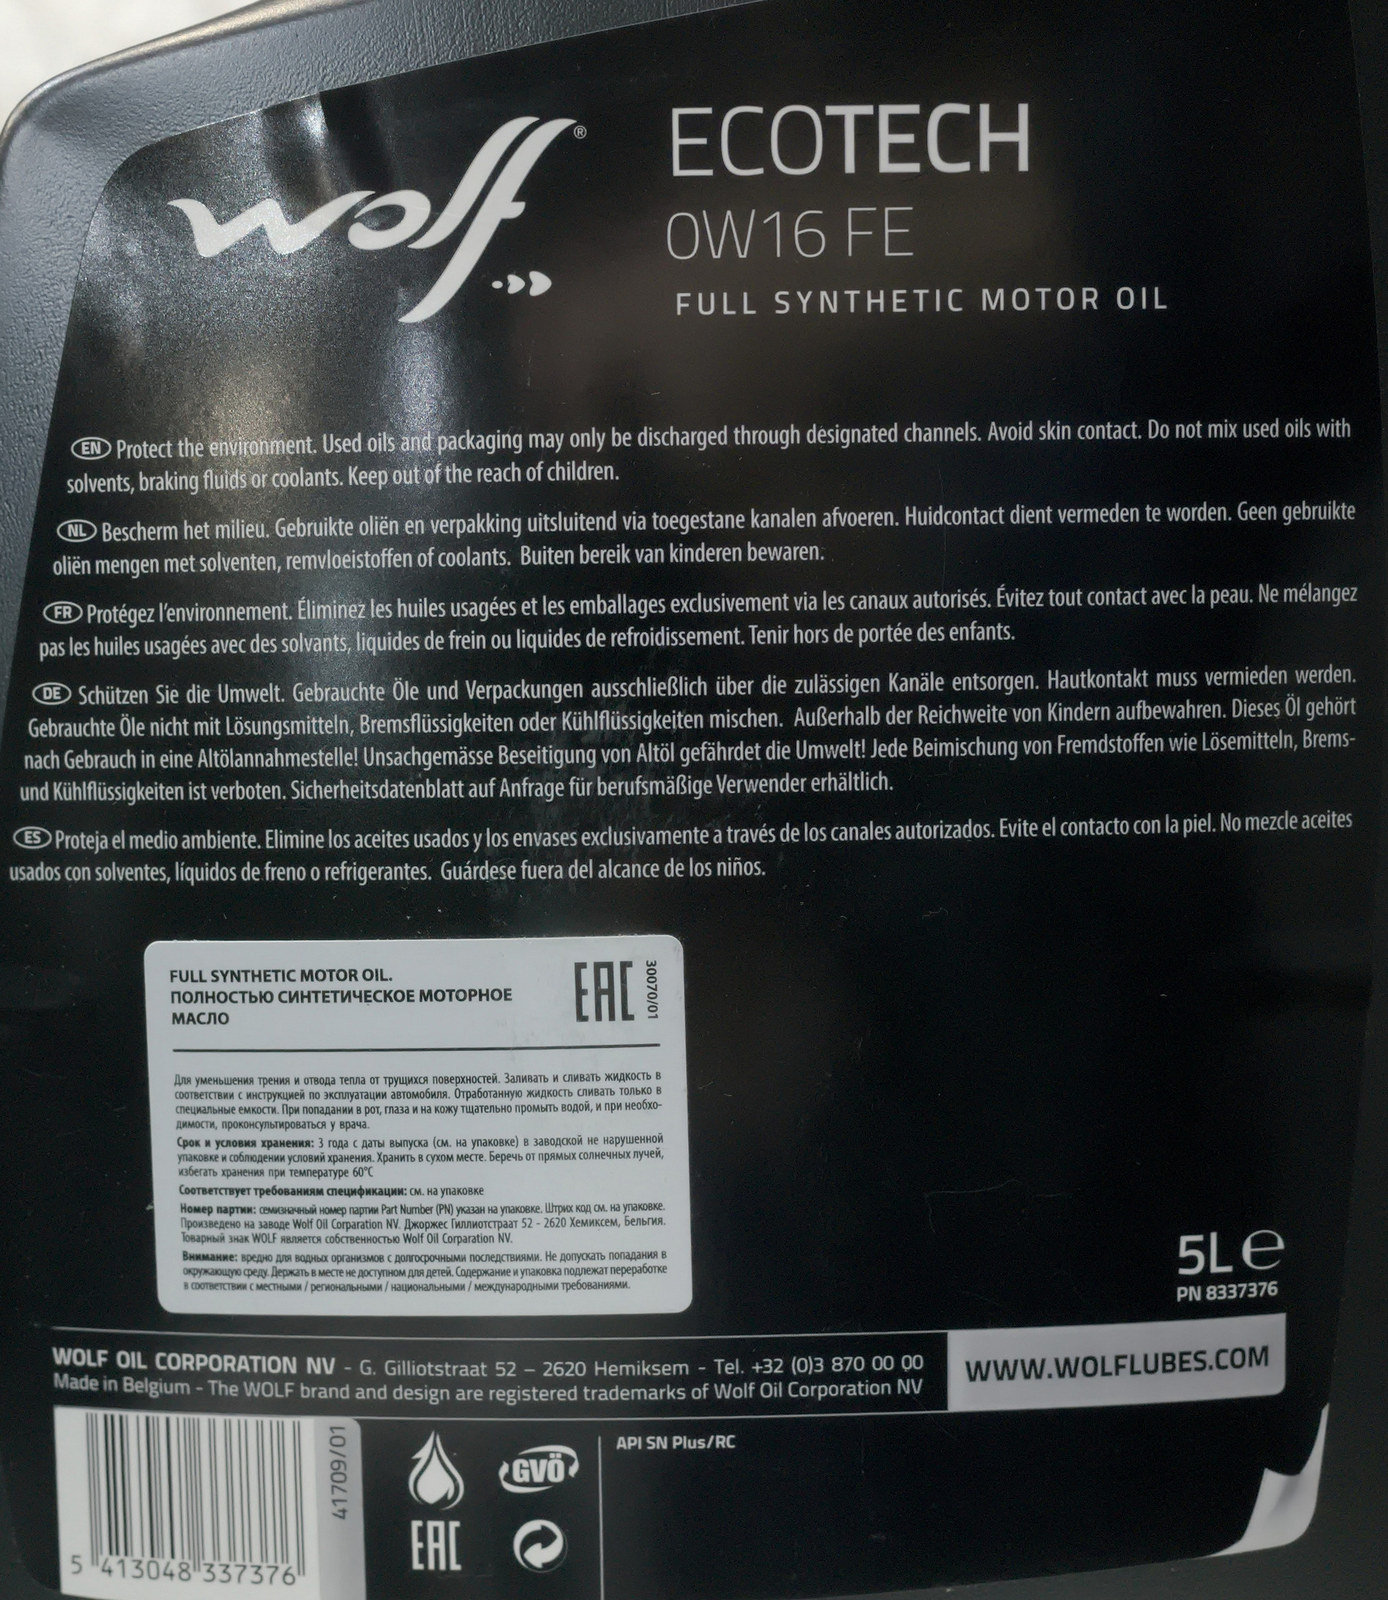 Wolf Ecotech FE 0W-16 (API: SN Plus/RC) - Страница 2 - Wolf - Форум oil .